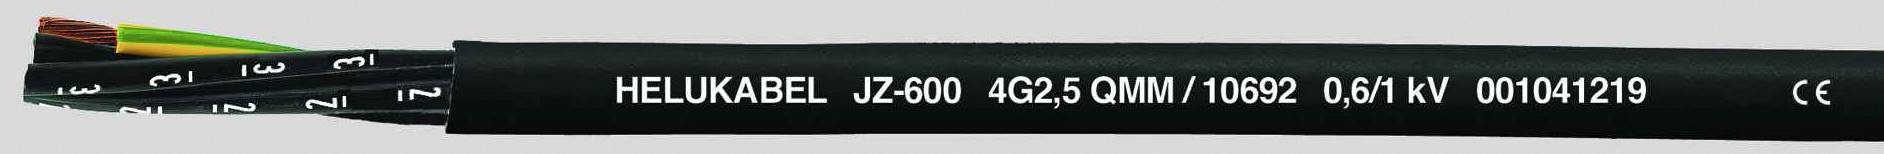 HELUKABEL JZ-600 Steuerleitung 3 G 0.75 mm² Schwarz 10583-500 500 m